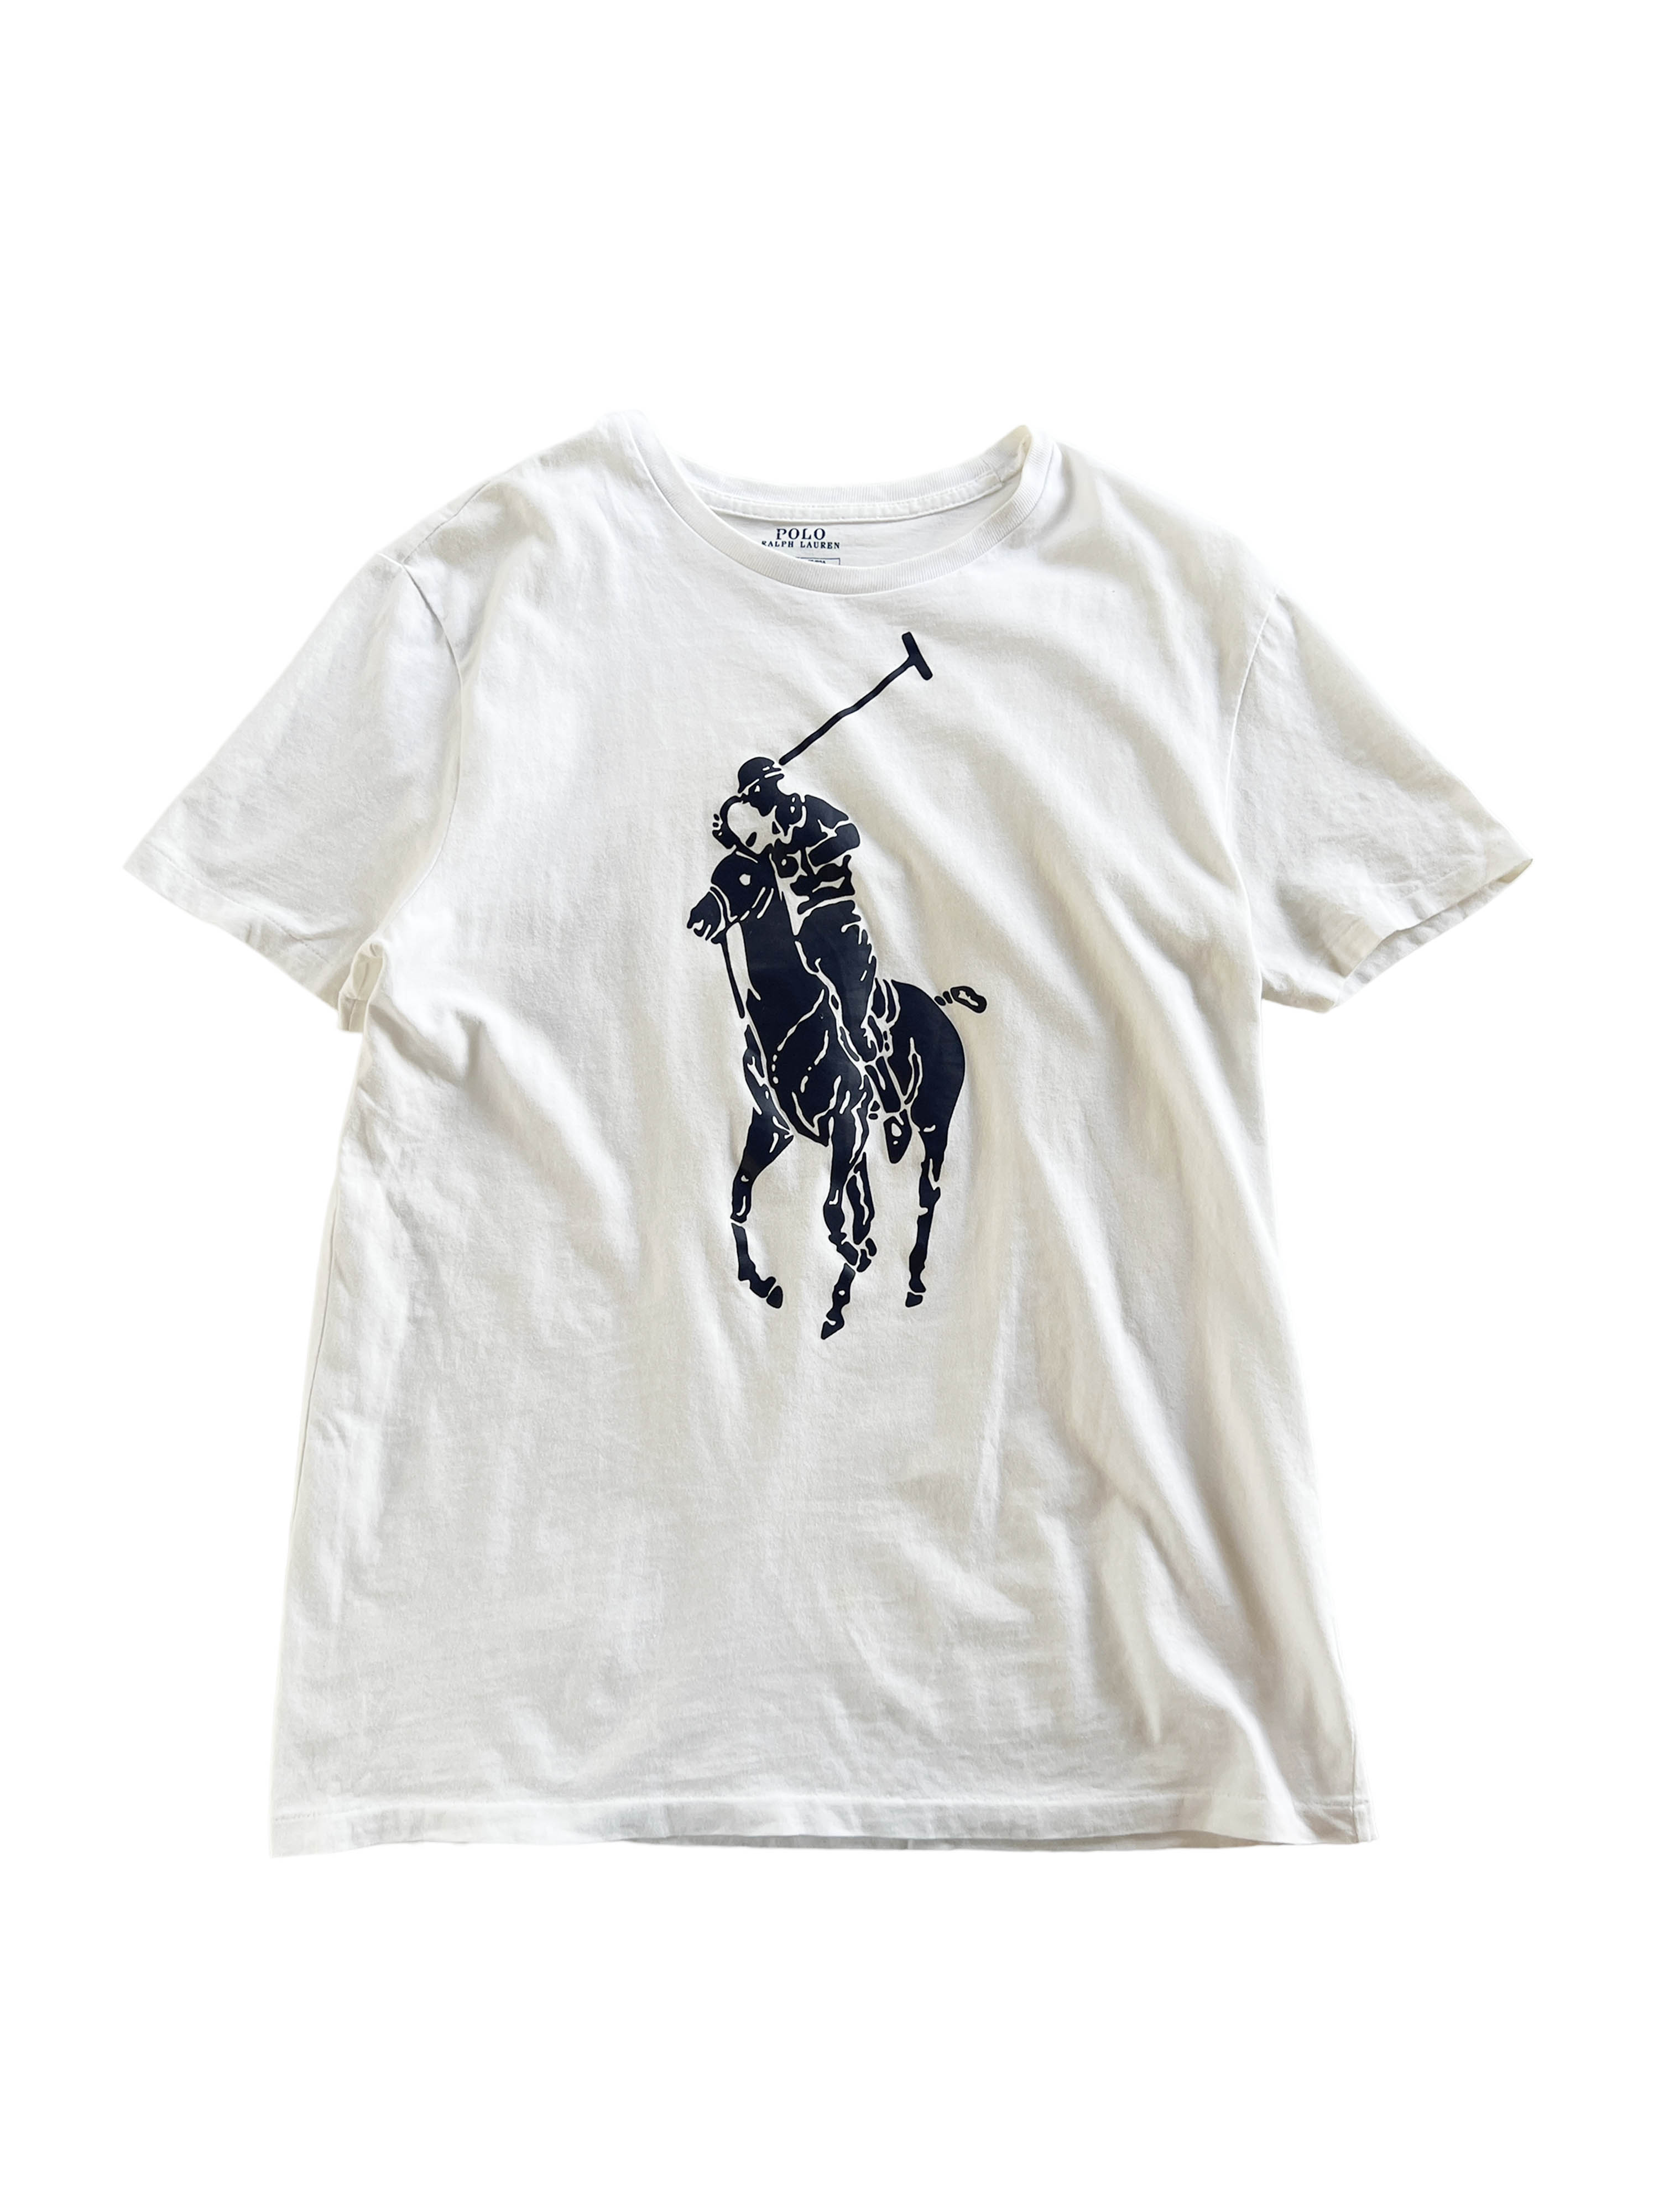 Polo by Ralph Lauren big logo t-shirts